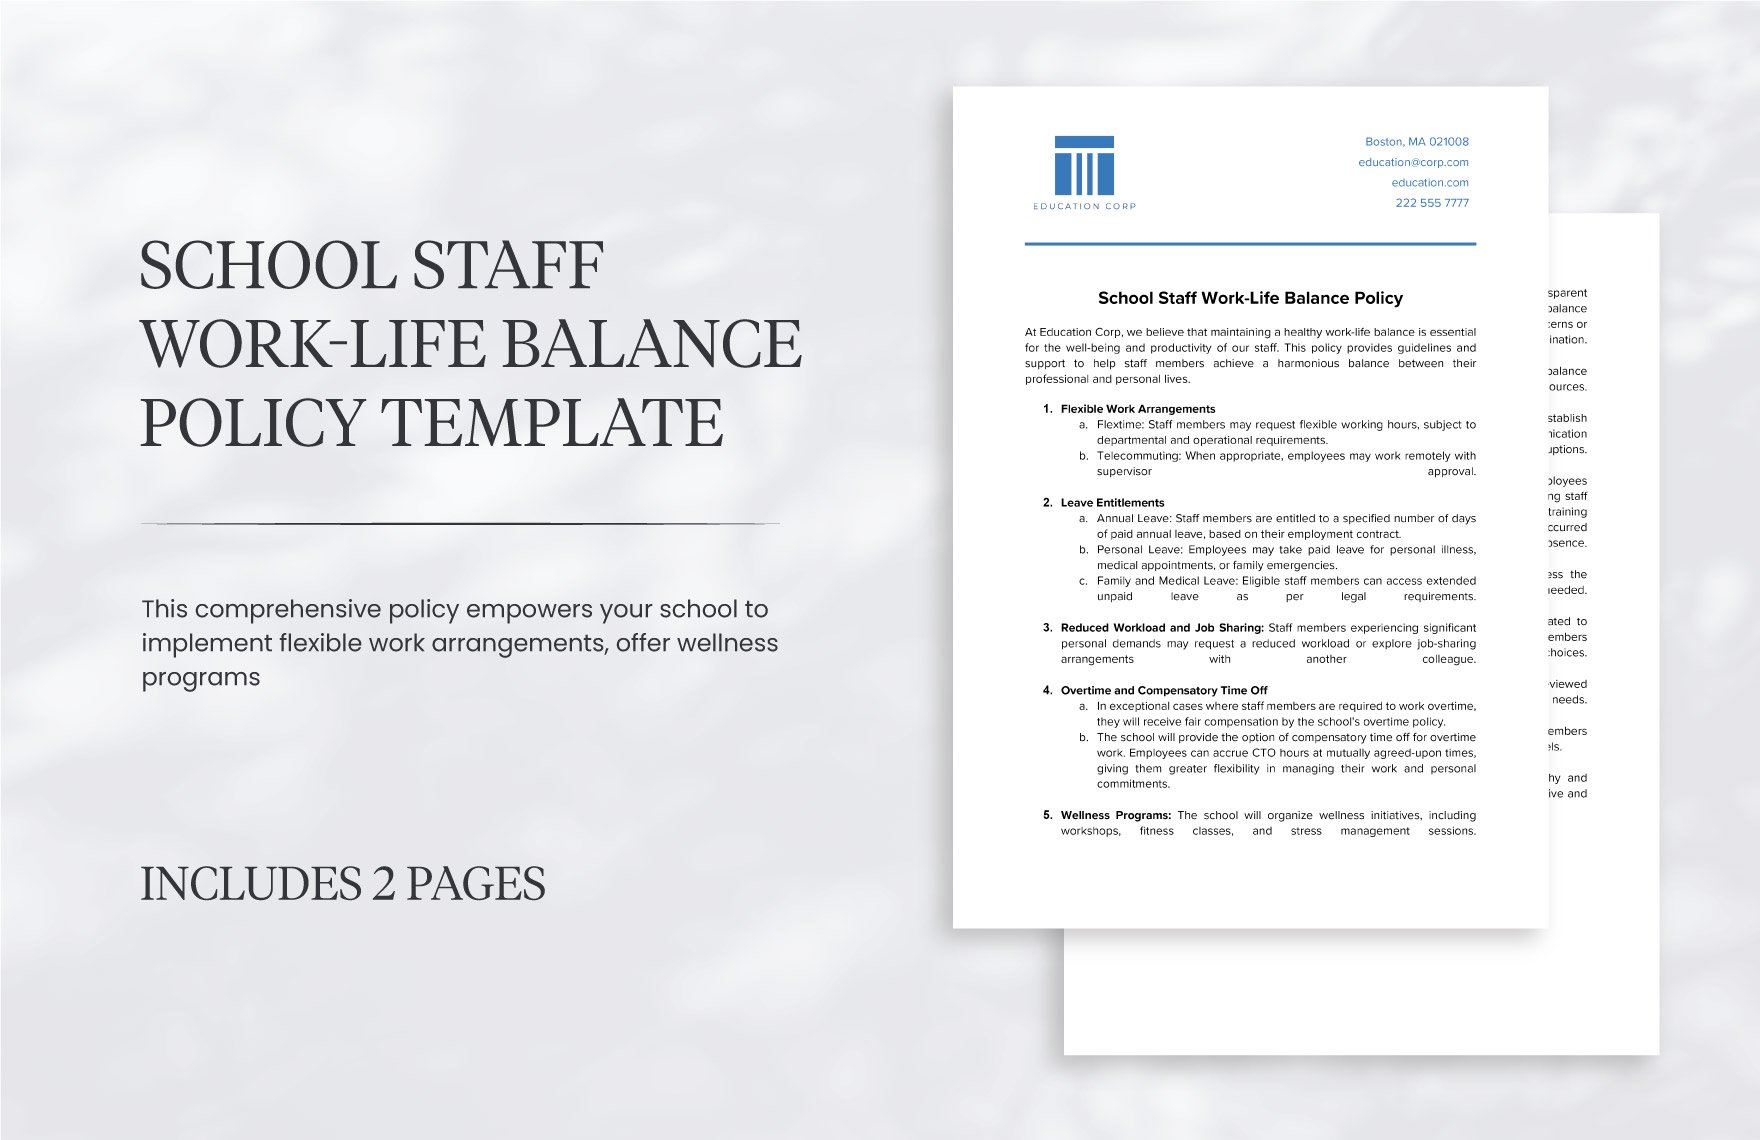 School Staff Work-Life Balance Policy Template